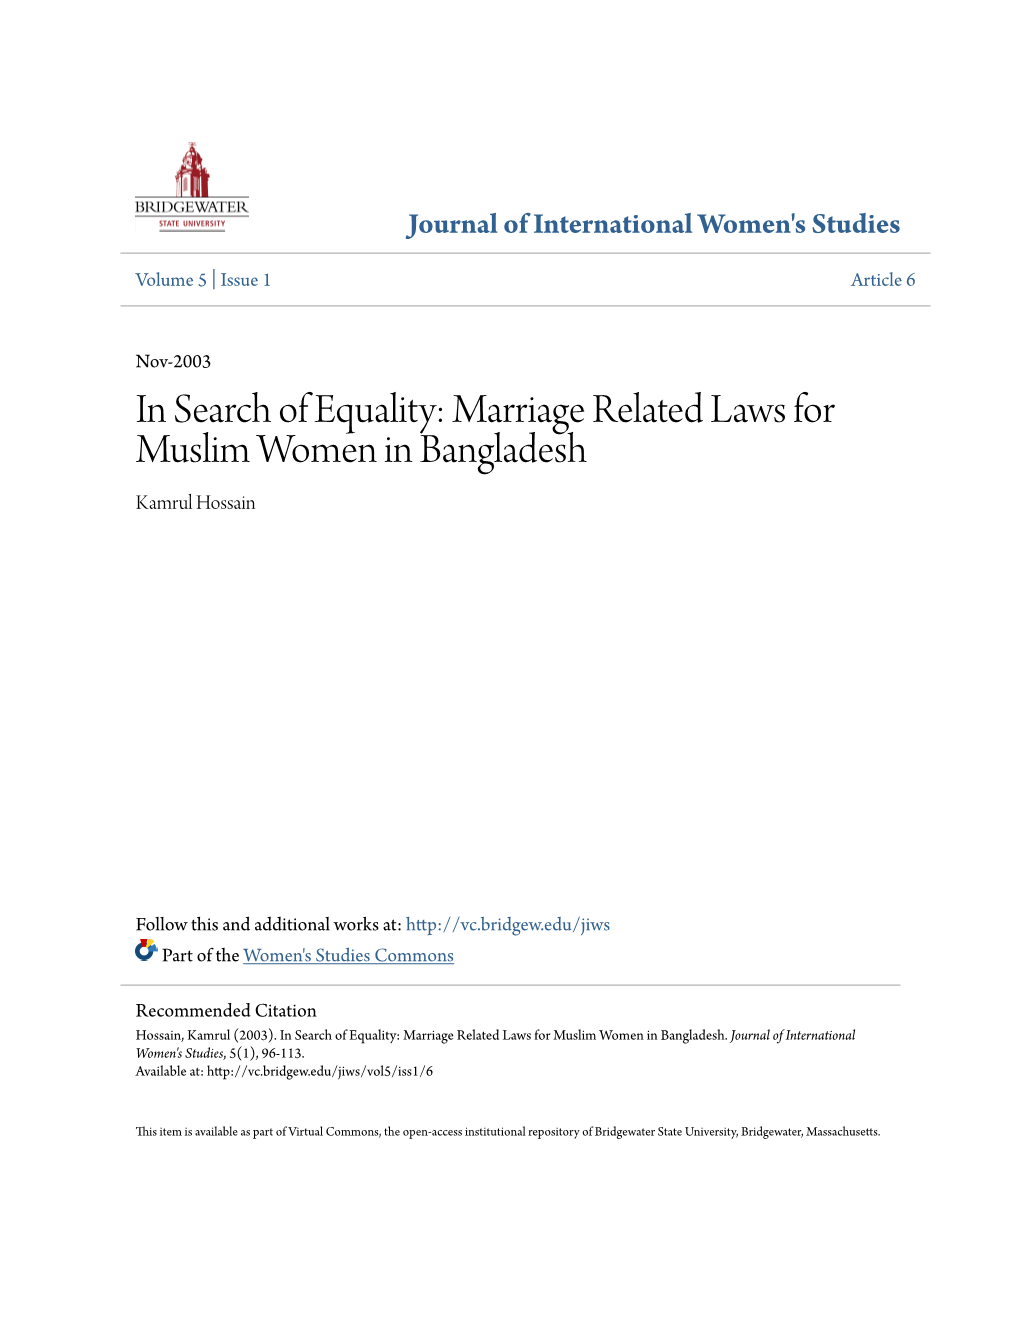 Marriage Related Laws for Muslim Women in Bangladesh Kamrul Hossain